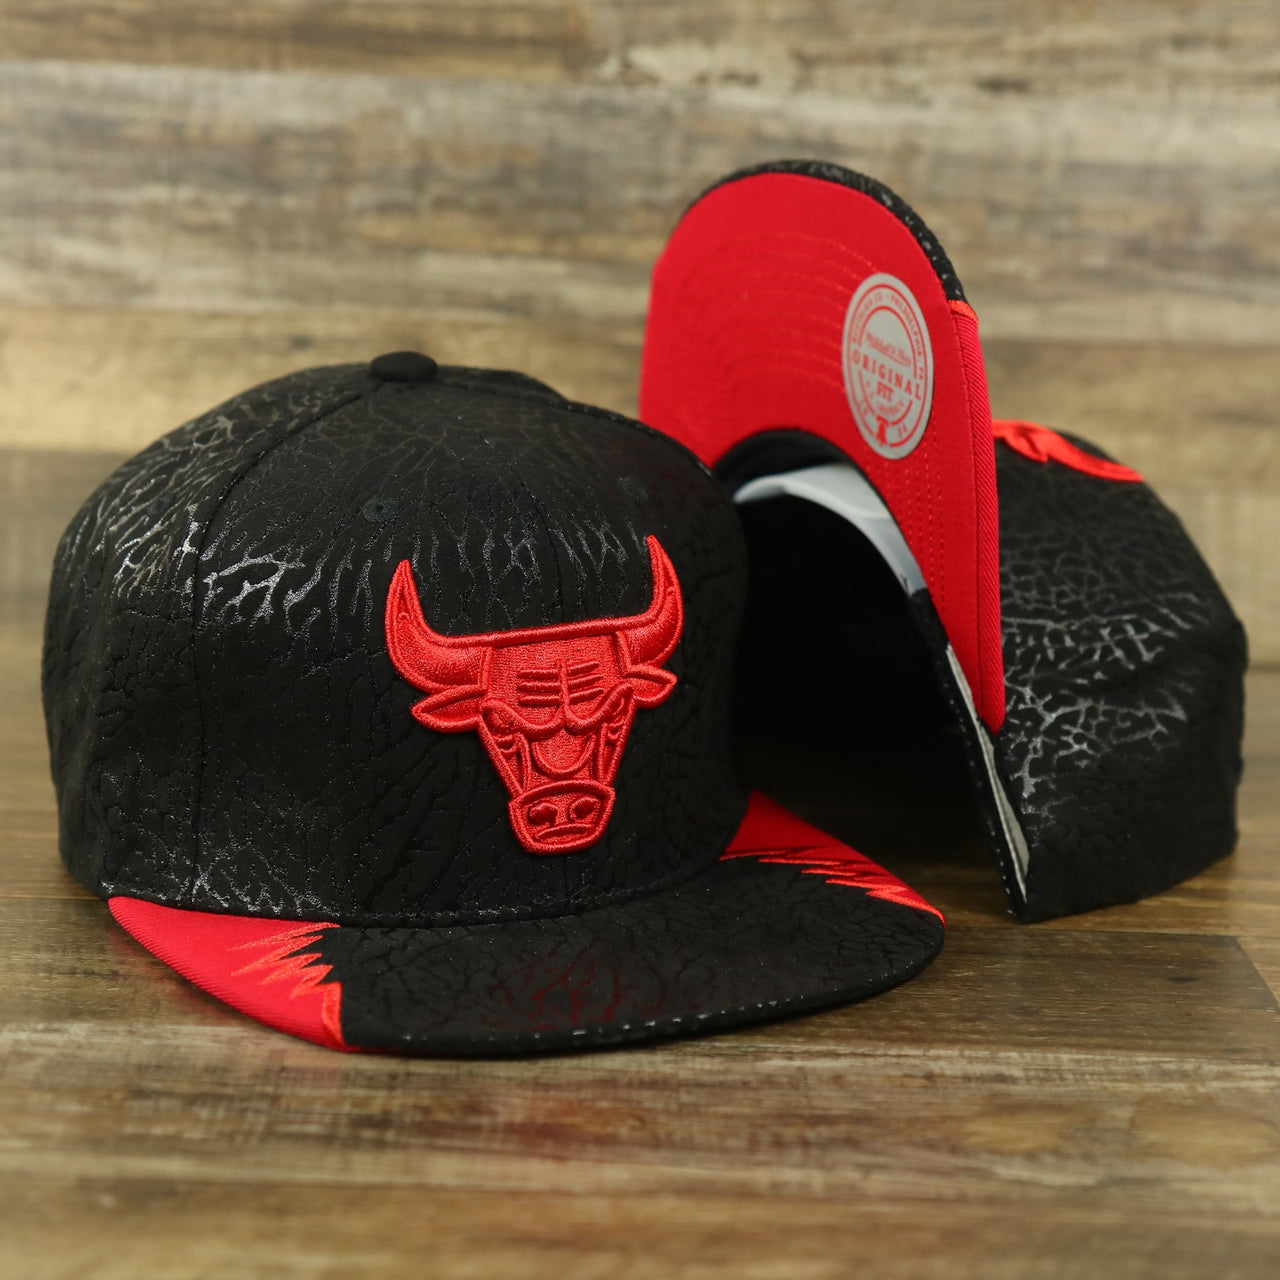 Chicago Bulls “NBA Day 5” Satin Bred 5s Matching Snapback Hat | Snapback to match Satin Bred 5s